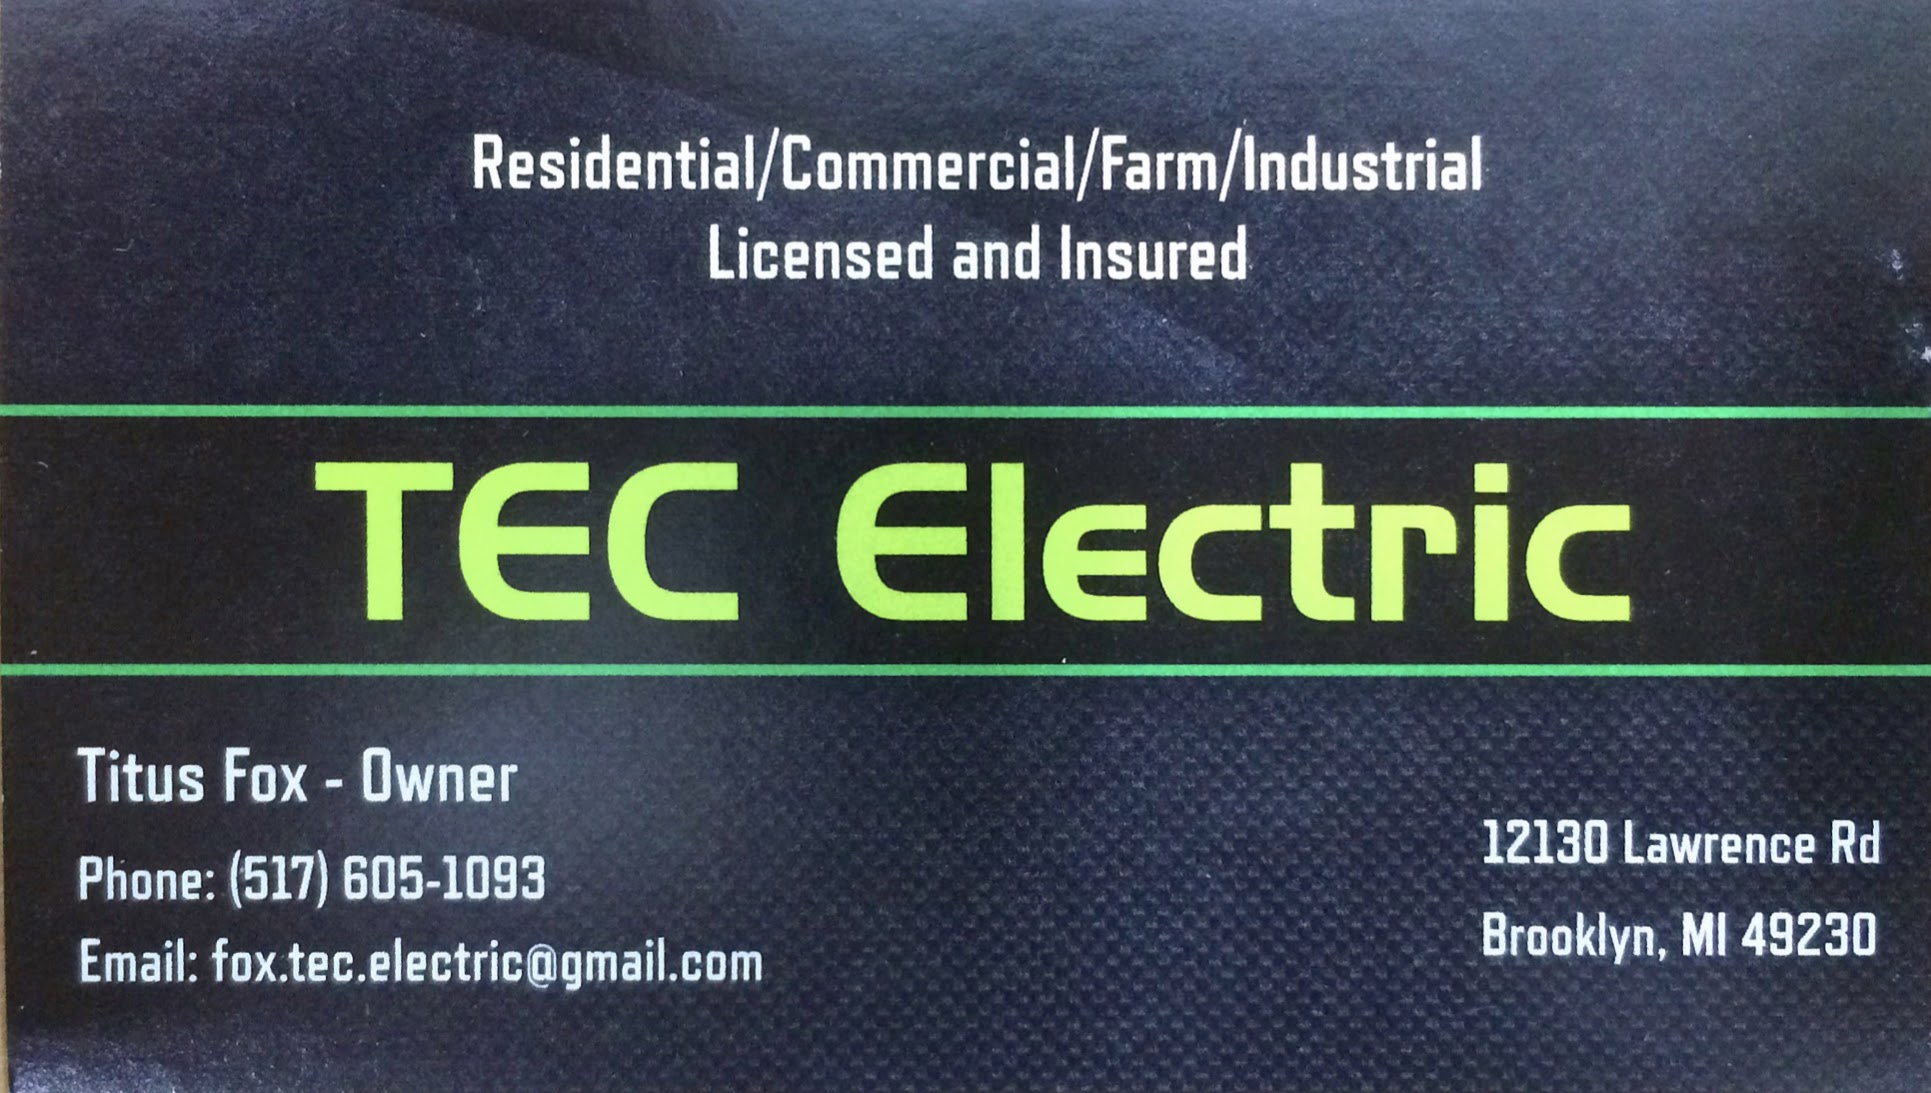 TEC Electric, LLC 12130 Lawrence Rd, Brooklyn Michigan 49230